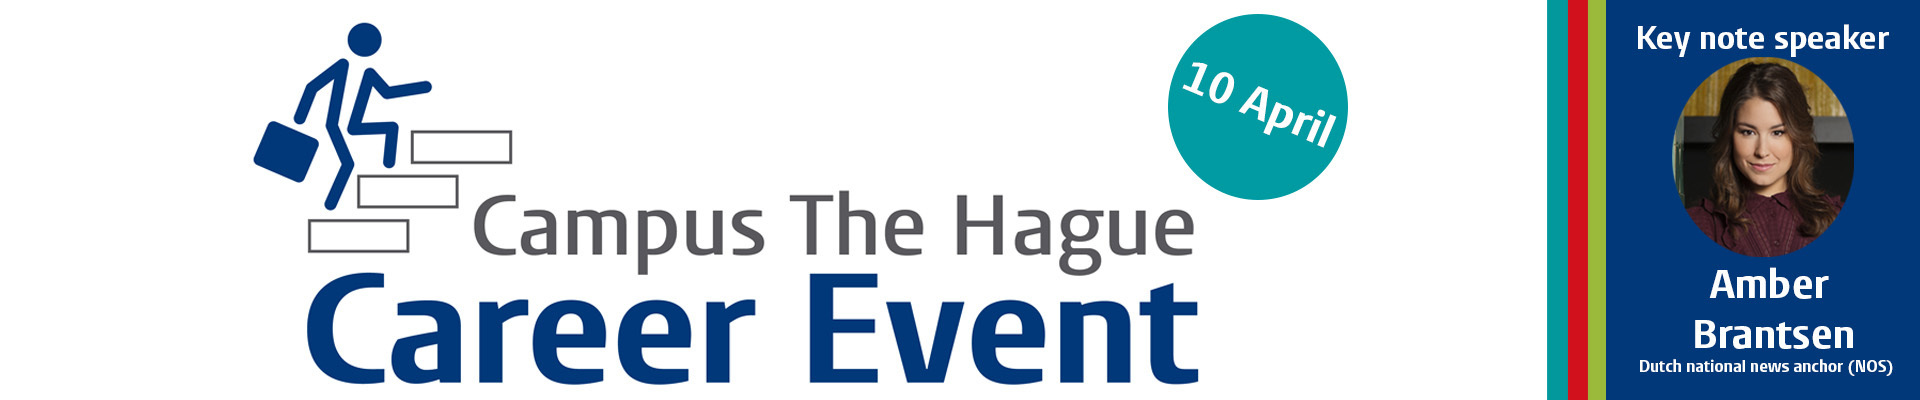 Campus The Hague Career Event 2019